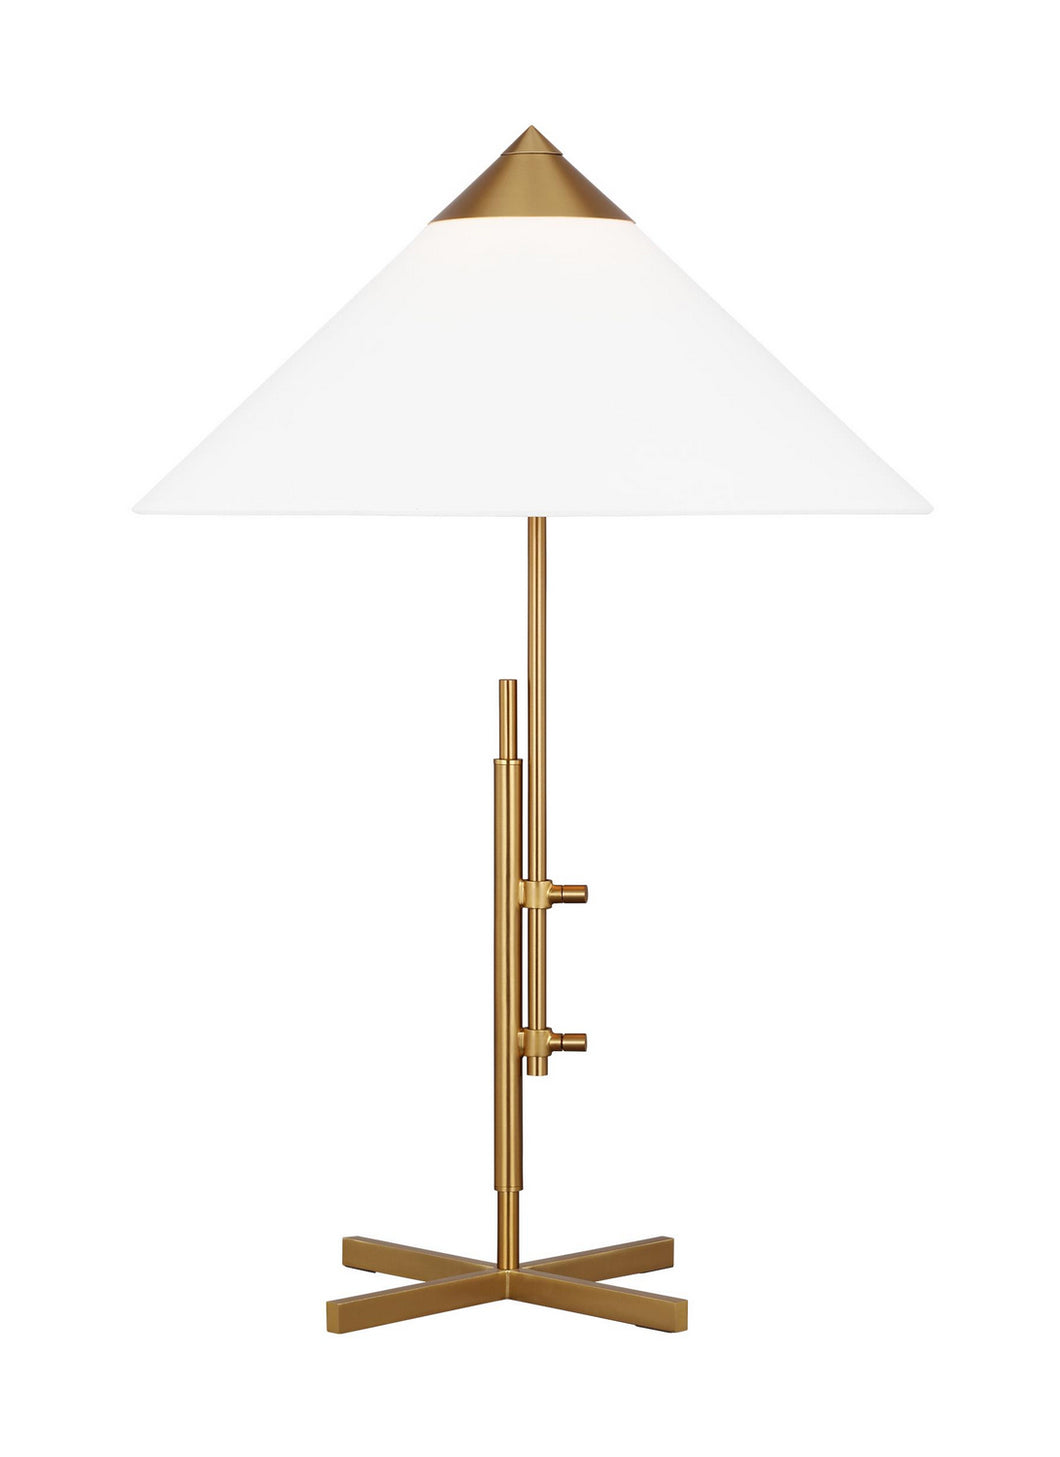 Generation Lighting - KT1281BBS1 - One Light Table Lamp - Franklin